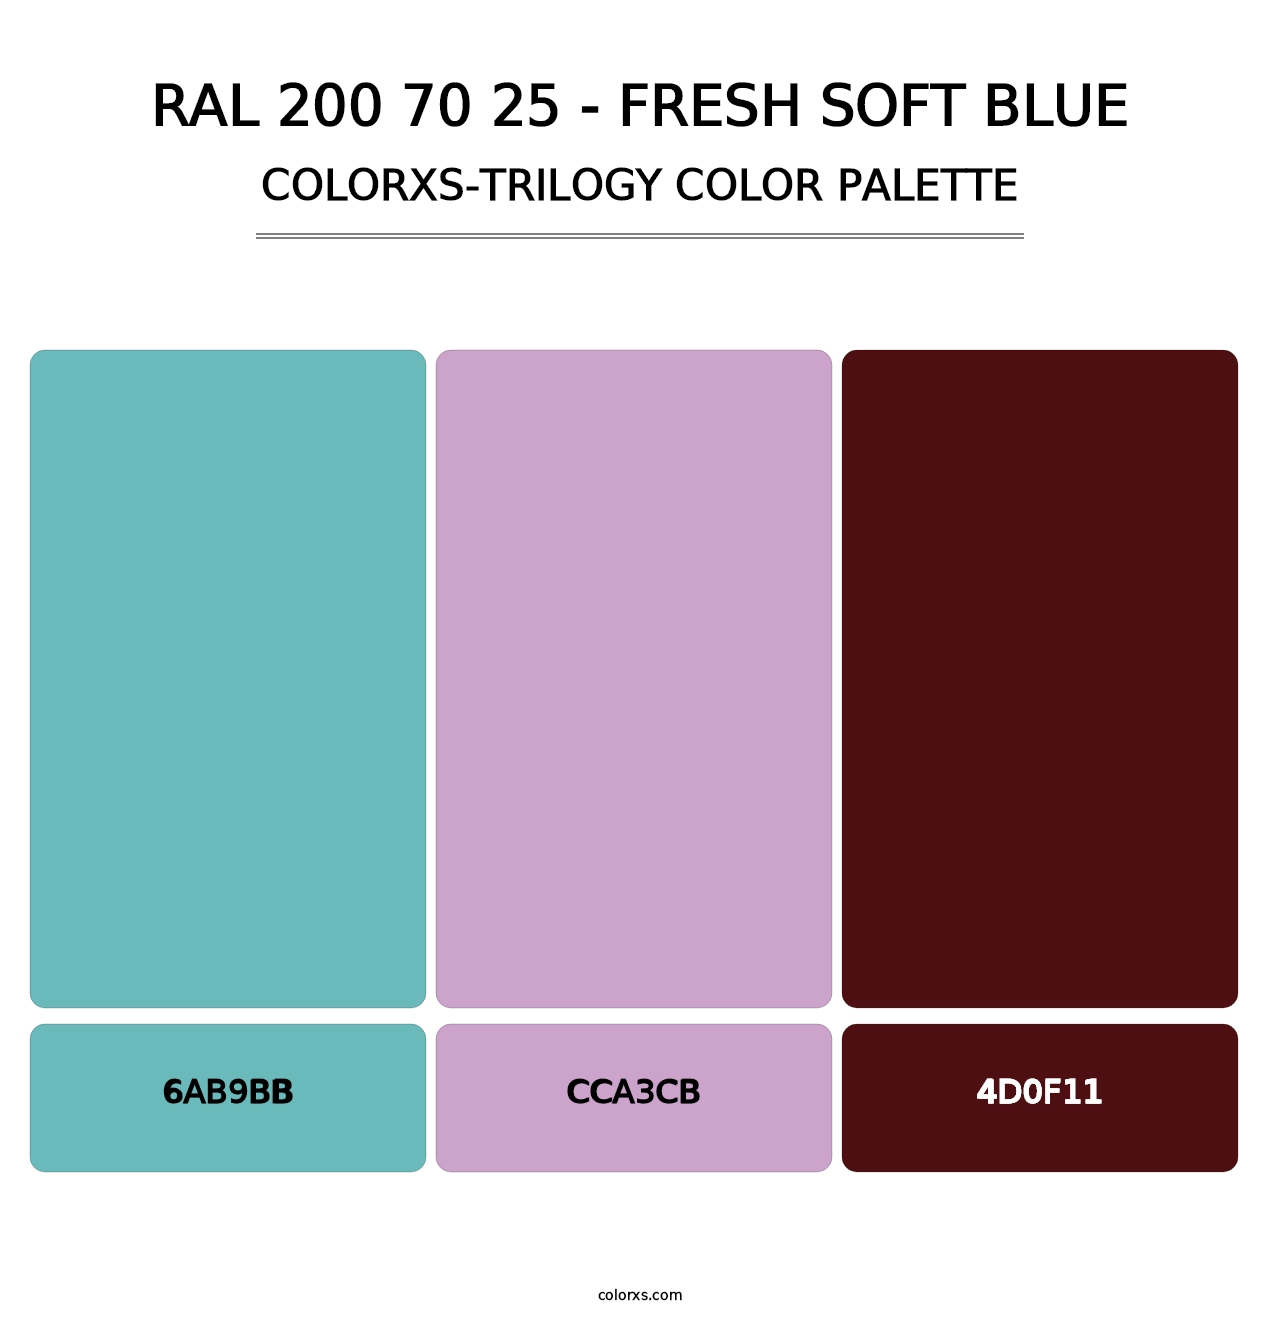 RAL 200 70 25 - Fresh Soft Blue - Colorxs Trilogy Palette